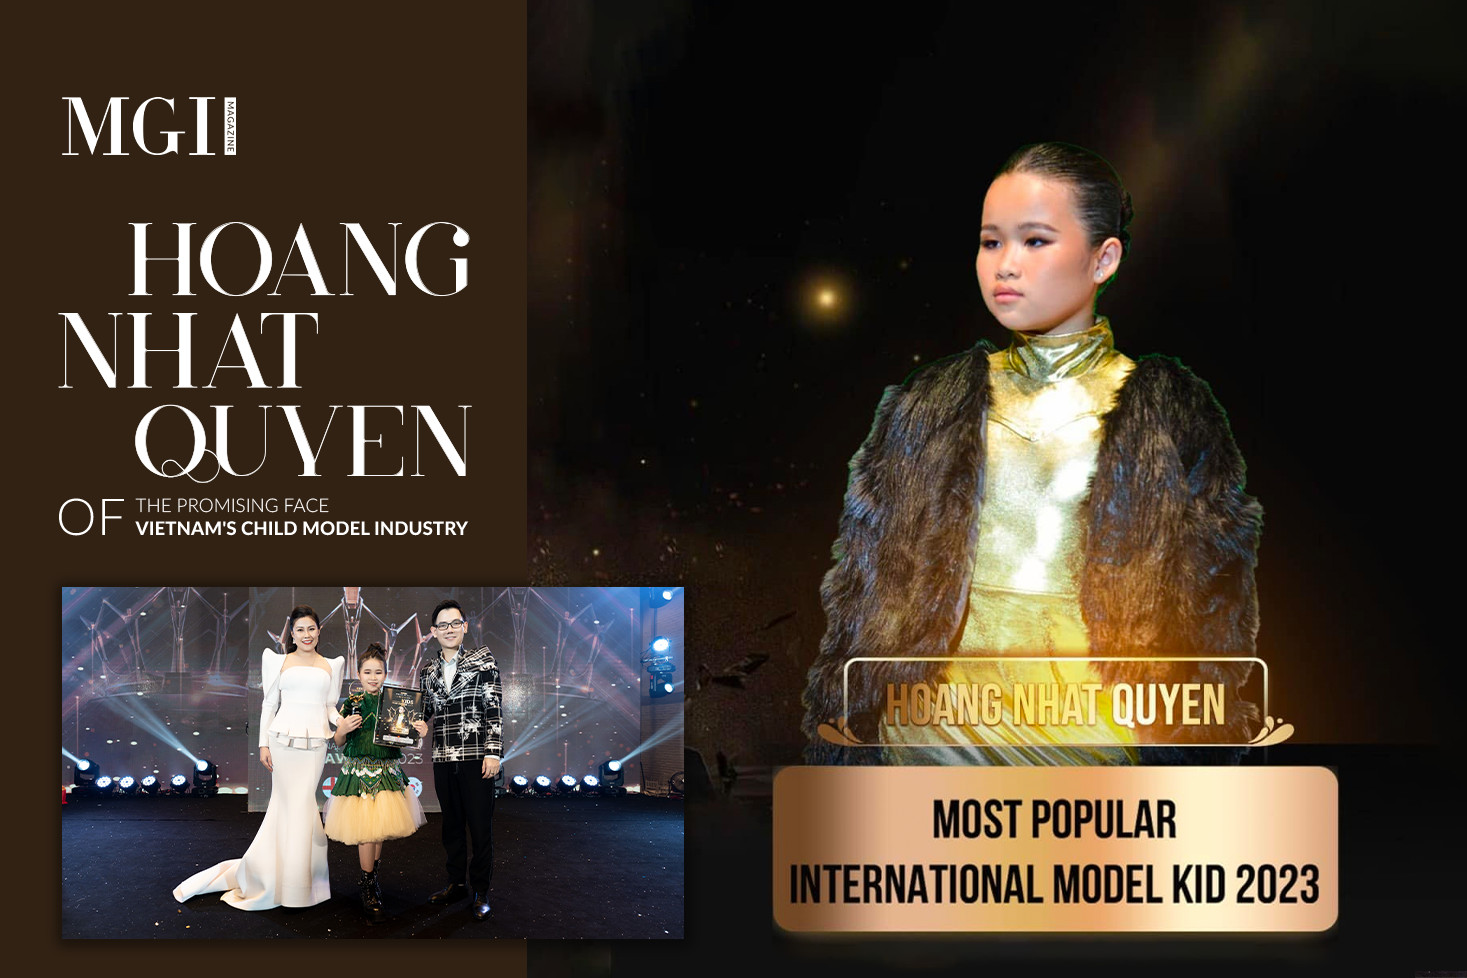 Hoang Nhat Quyen - the promising face of Vietnam's child model industry